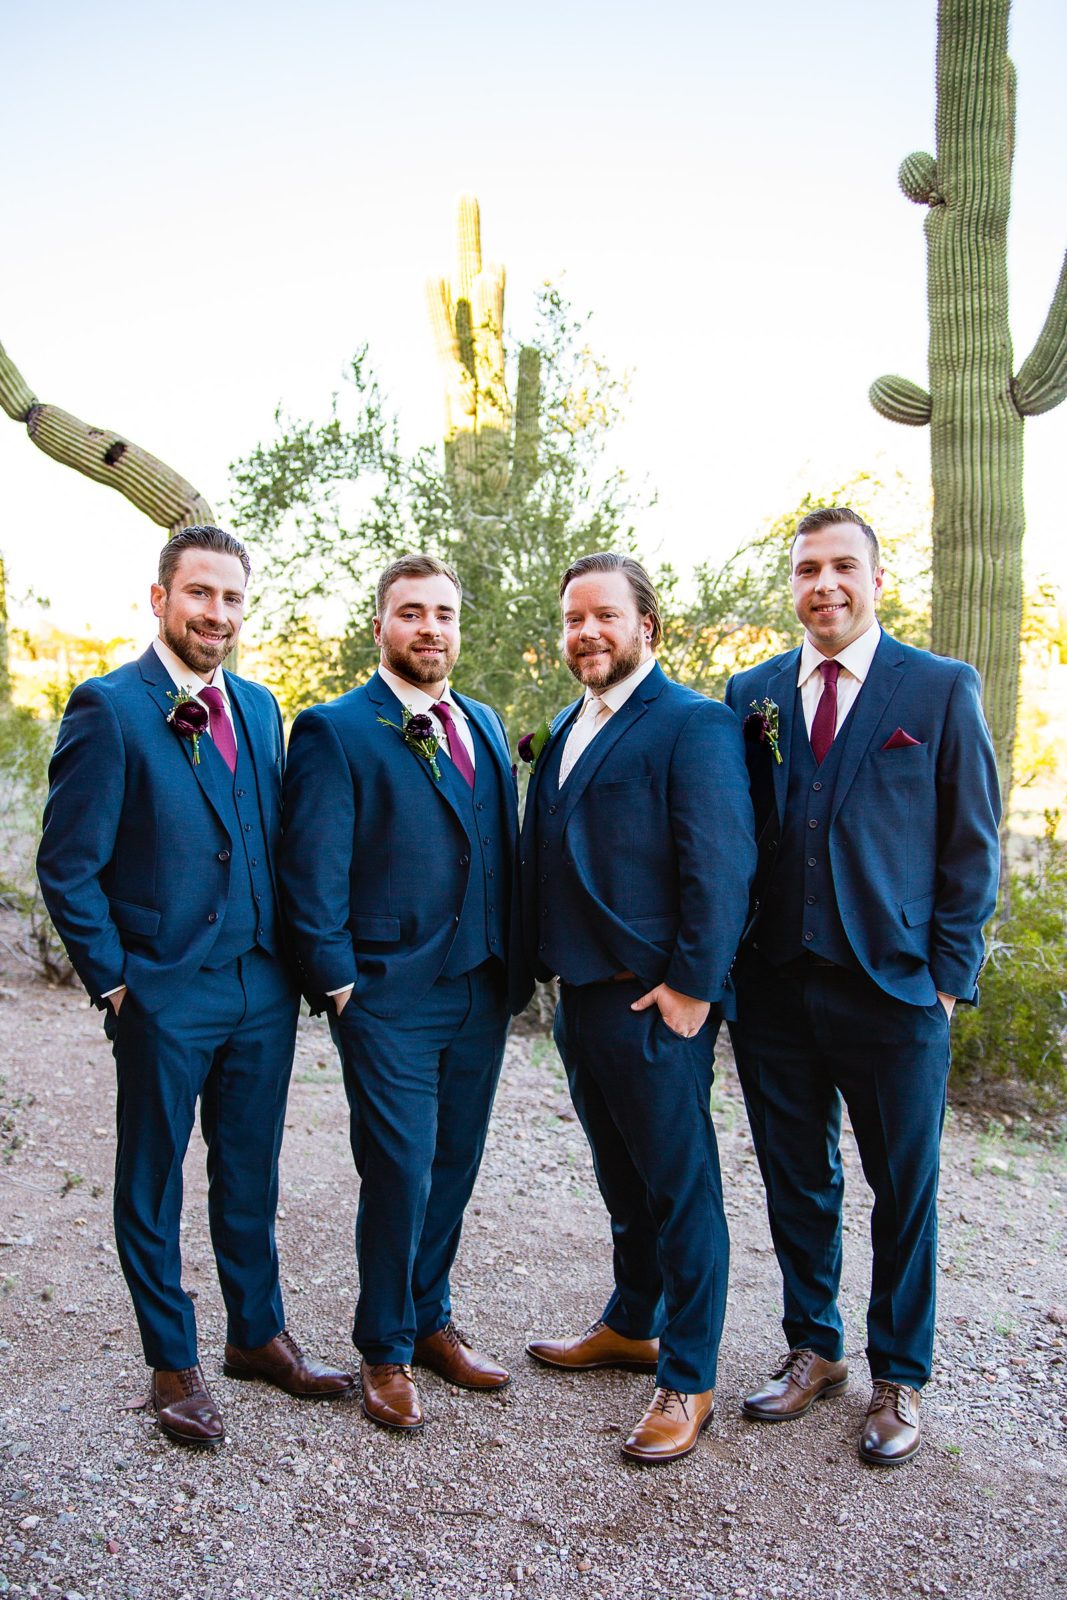 Groom and groomsmen together at a Arizona Heritage Center at Papago Park wedding by Arizona wedding photographer PMA Photography.